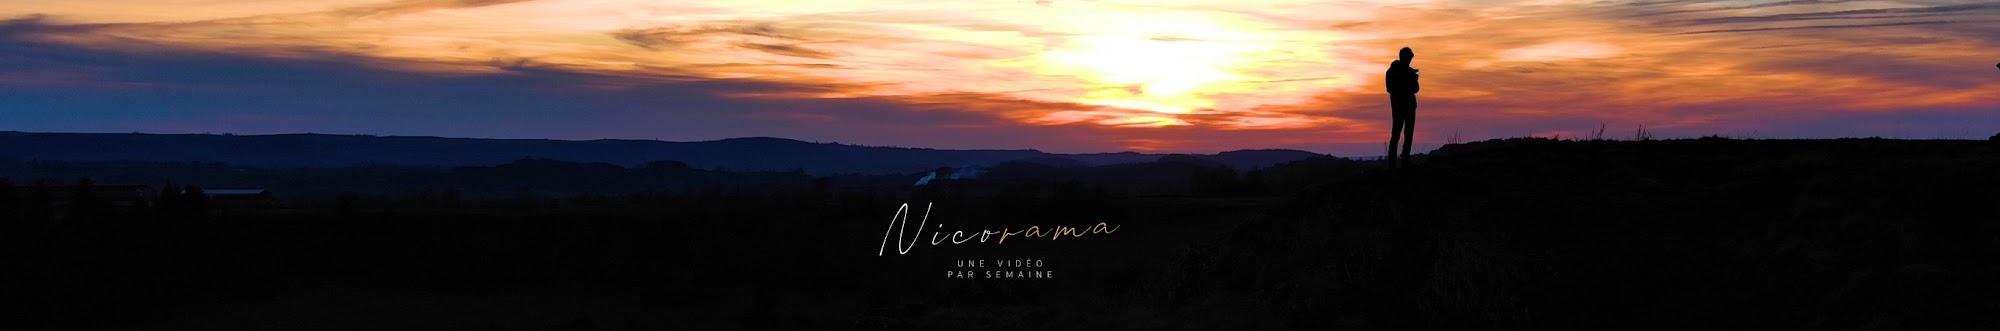 Nicorama